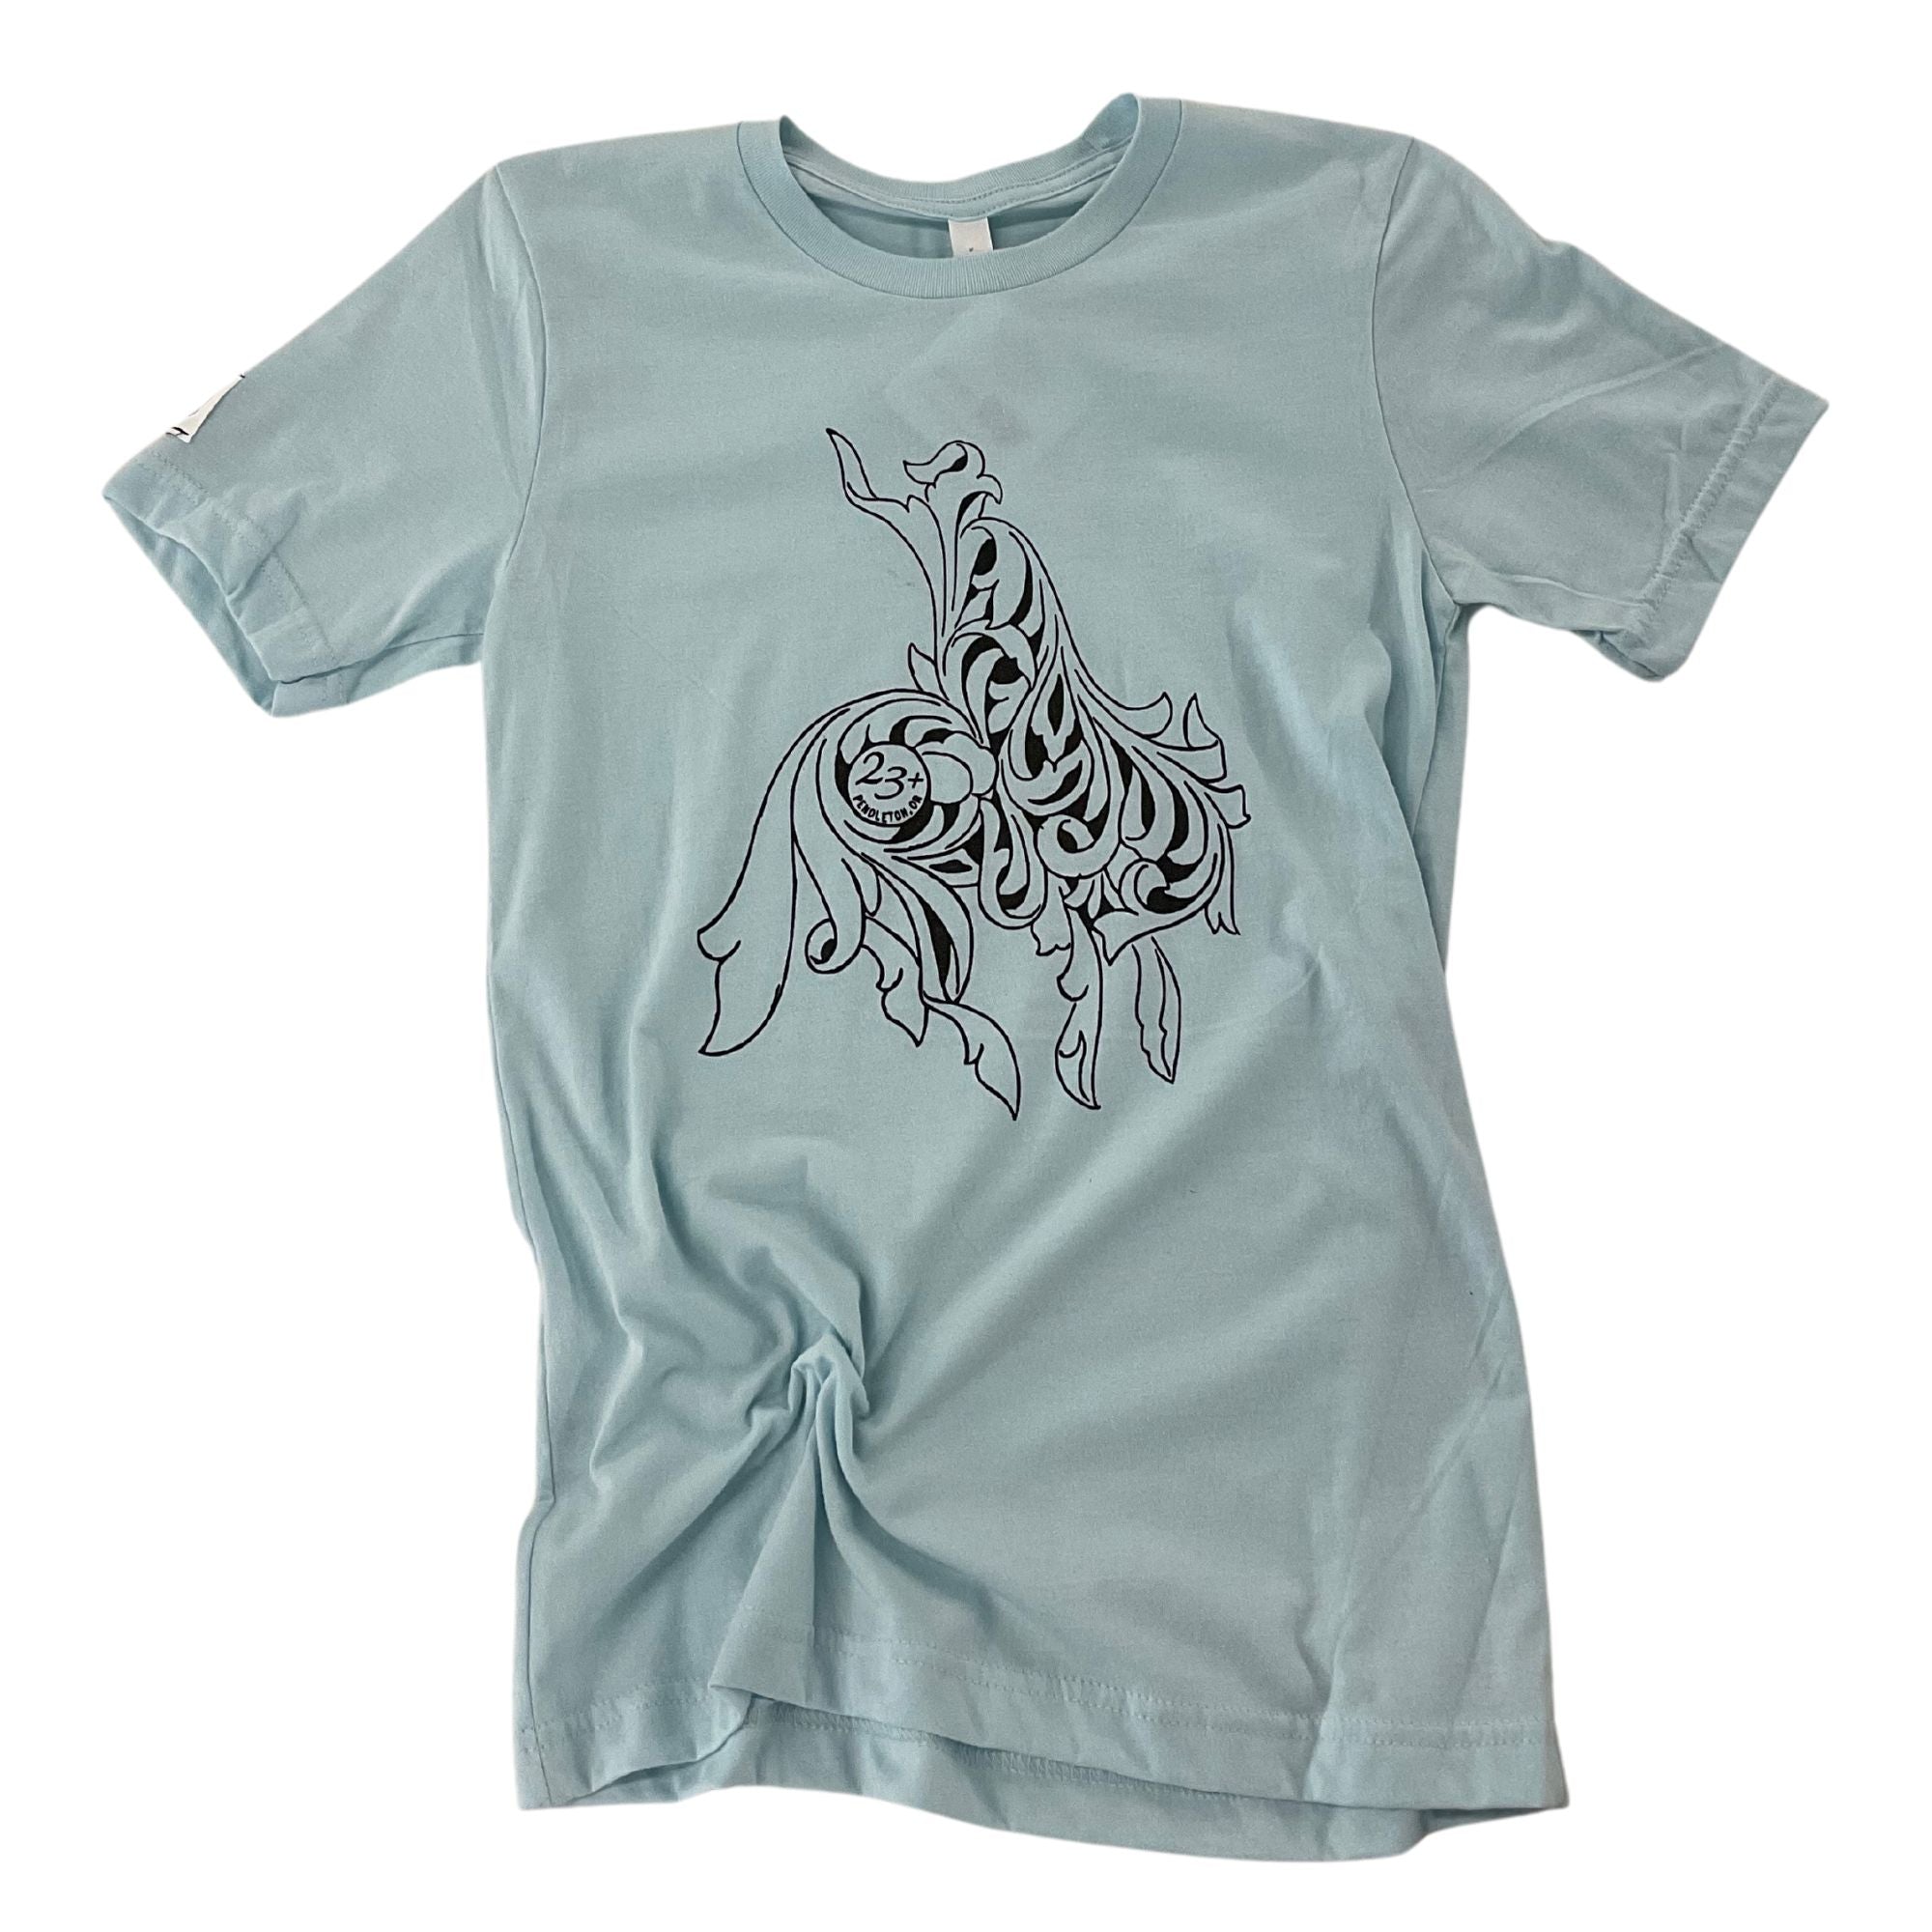 Specialty Pattern T-Shirt - Bucking Horse - Light Blue